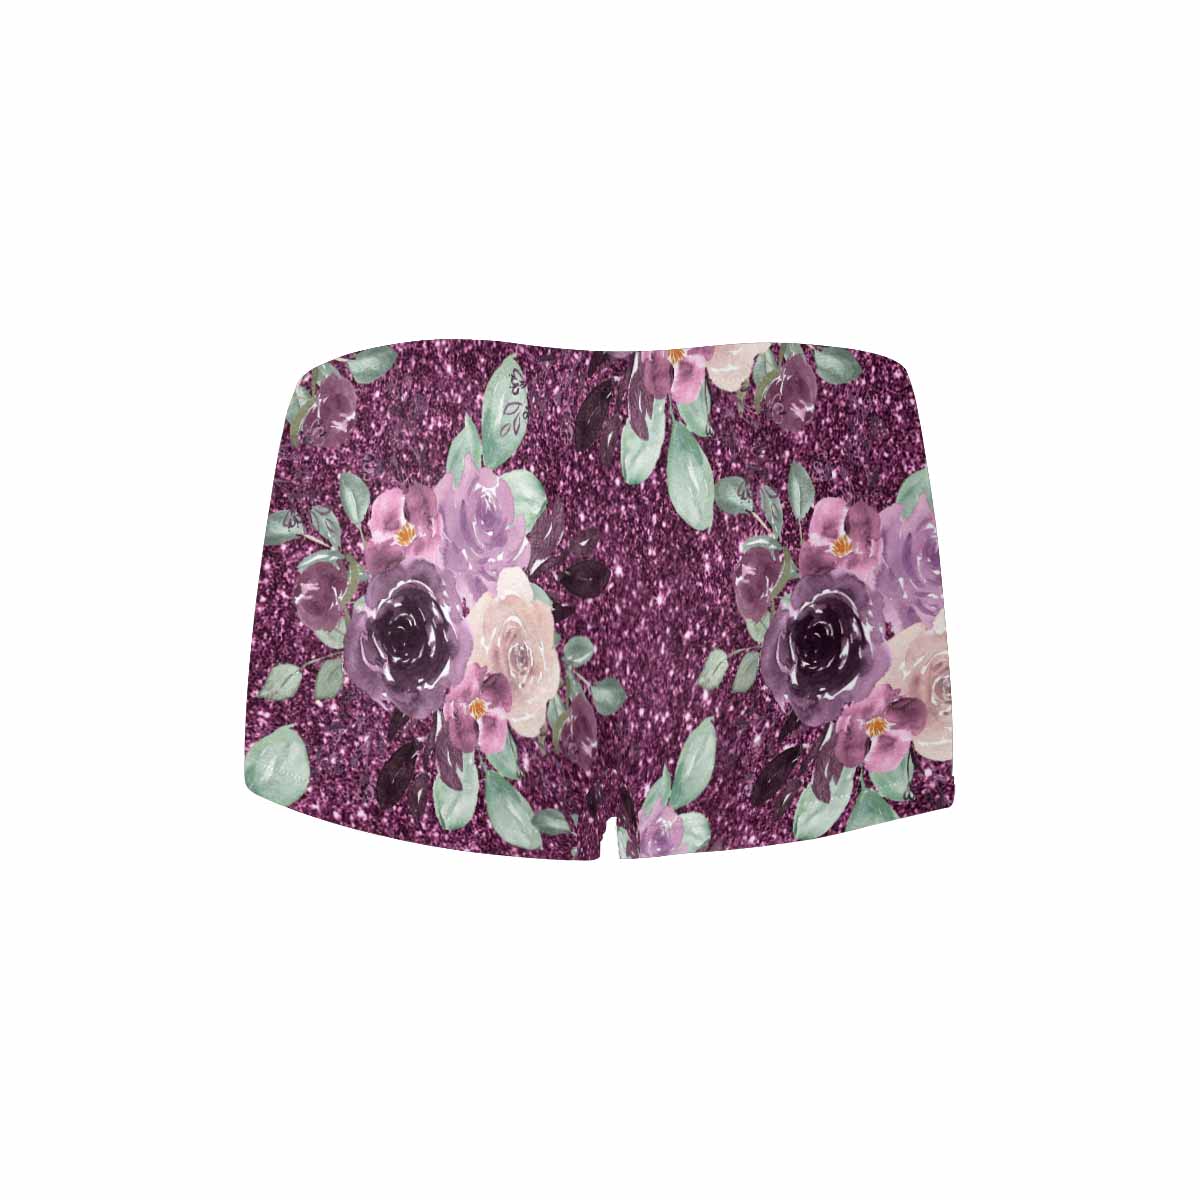 Floral 2, boyshorts, daisy dukes, pum pum shorts, panties, design 36